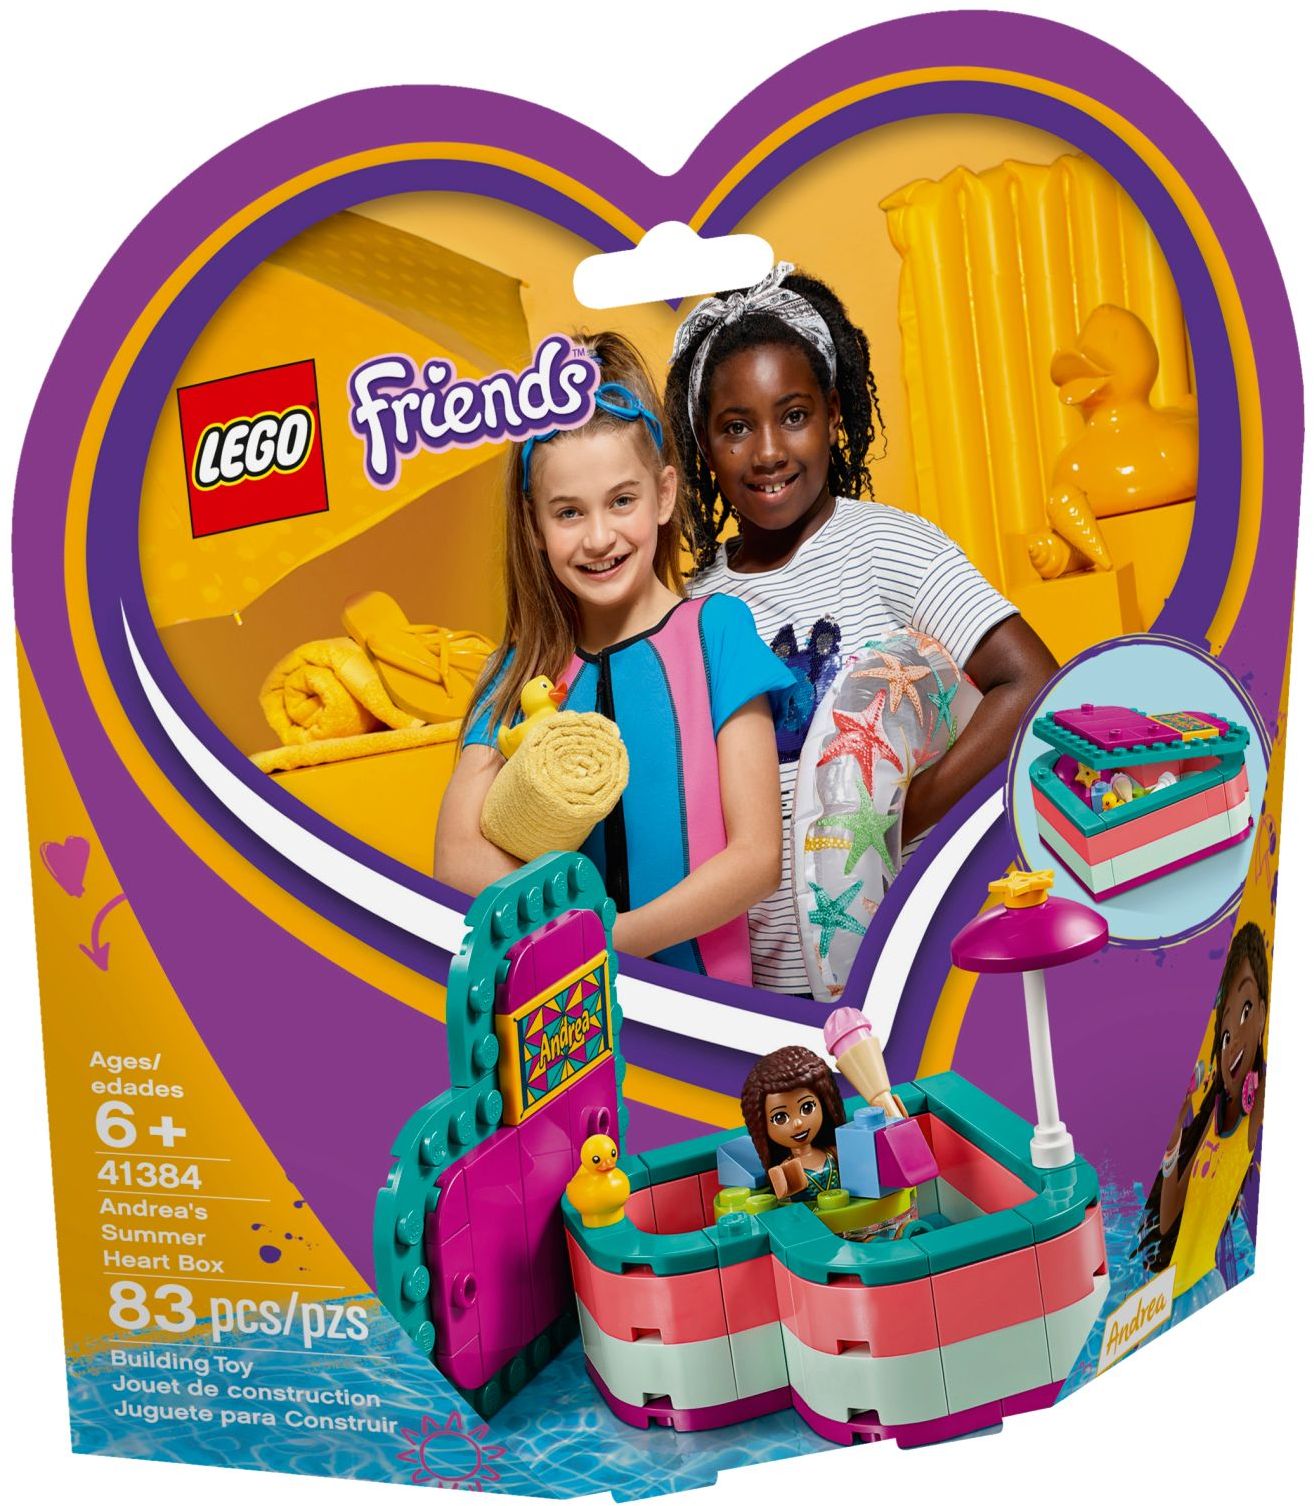 41384 LEGO Friends Andrea's Summer Heart Box - Hộp trái tim mùa hè của Andrea